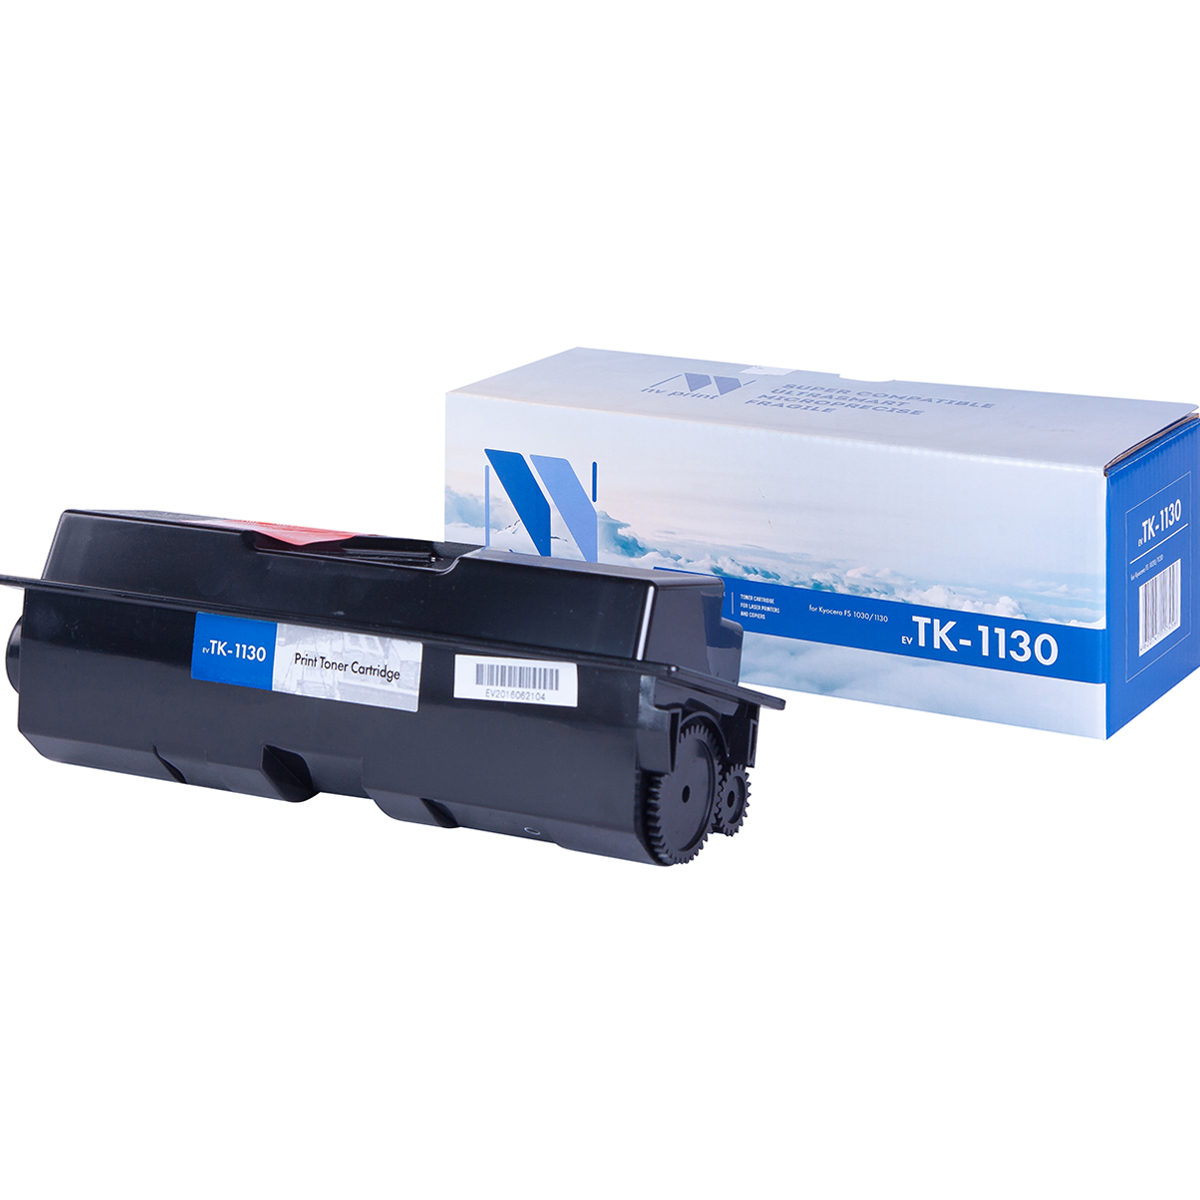 Картридж NV Print TK-1130 для Kyocera FS 1030/1130 (3000k) картридж nv print tk 1130 для kyocera fs 1030 1130mfp черный 3000стр